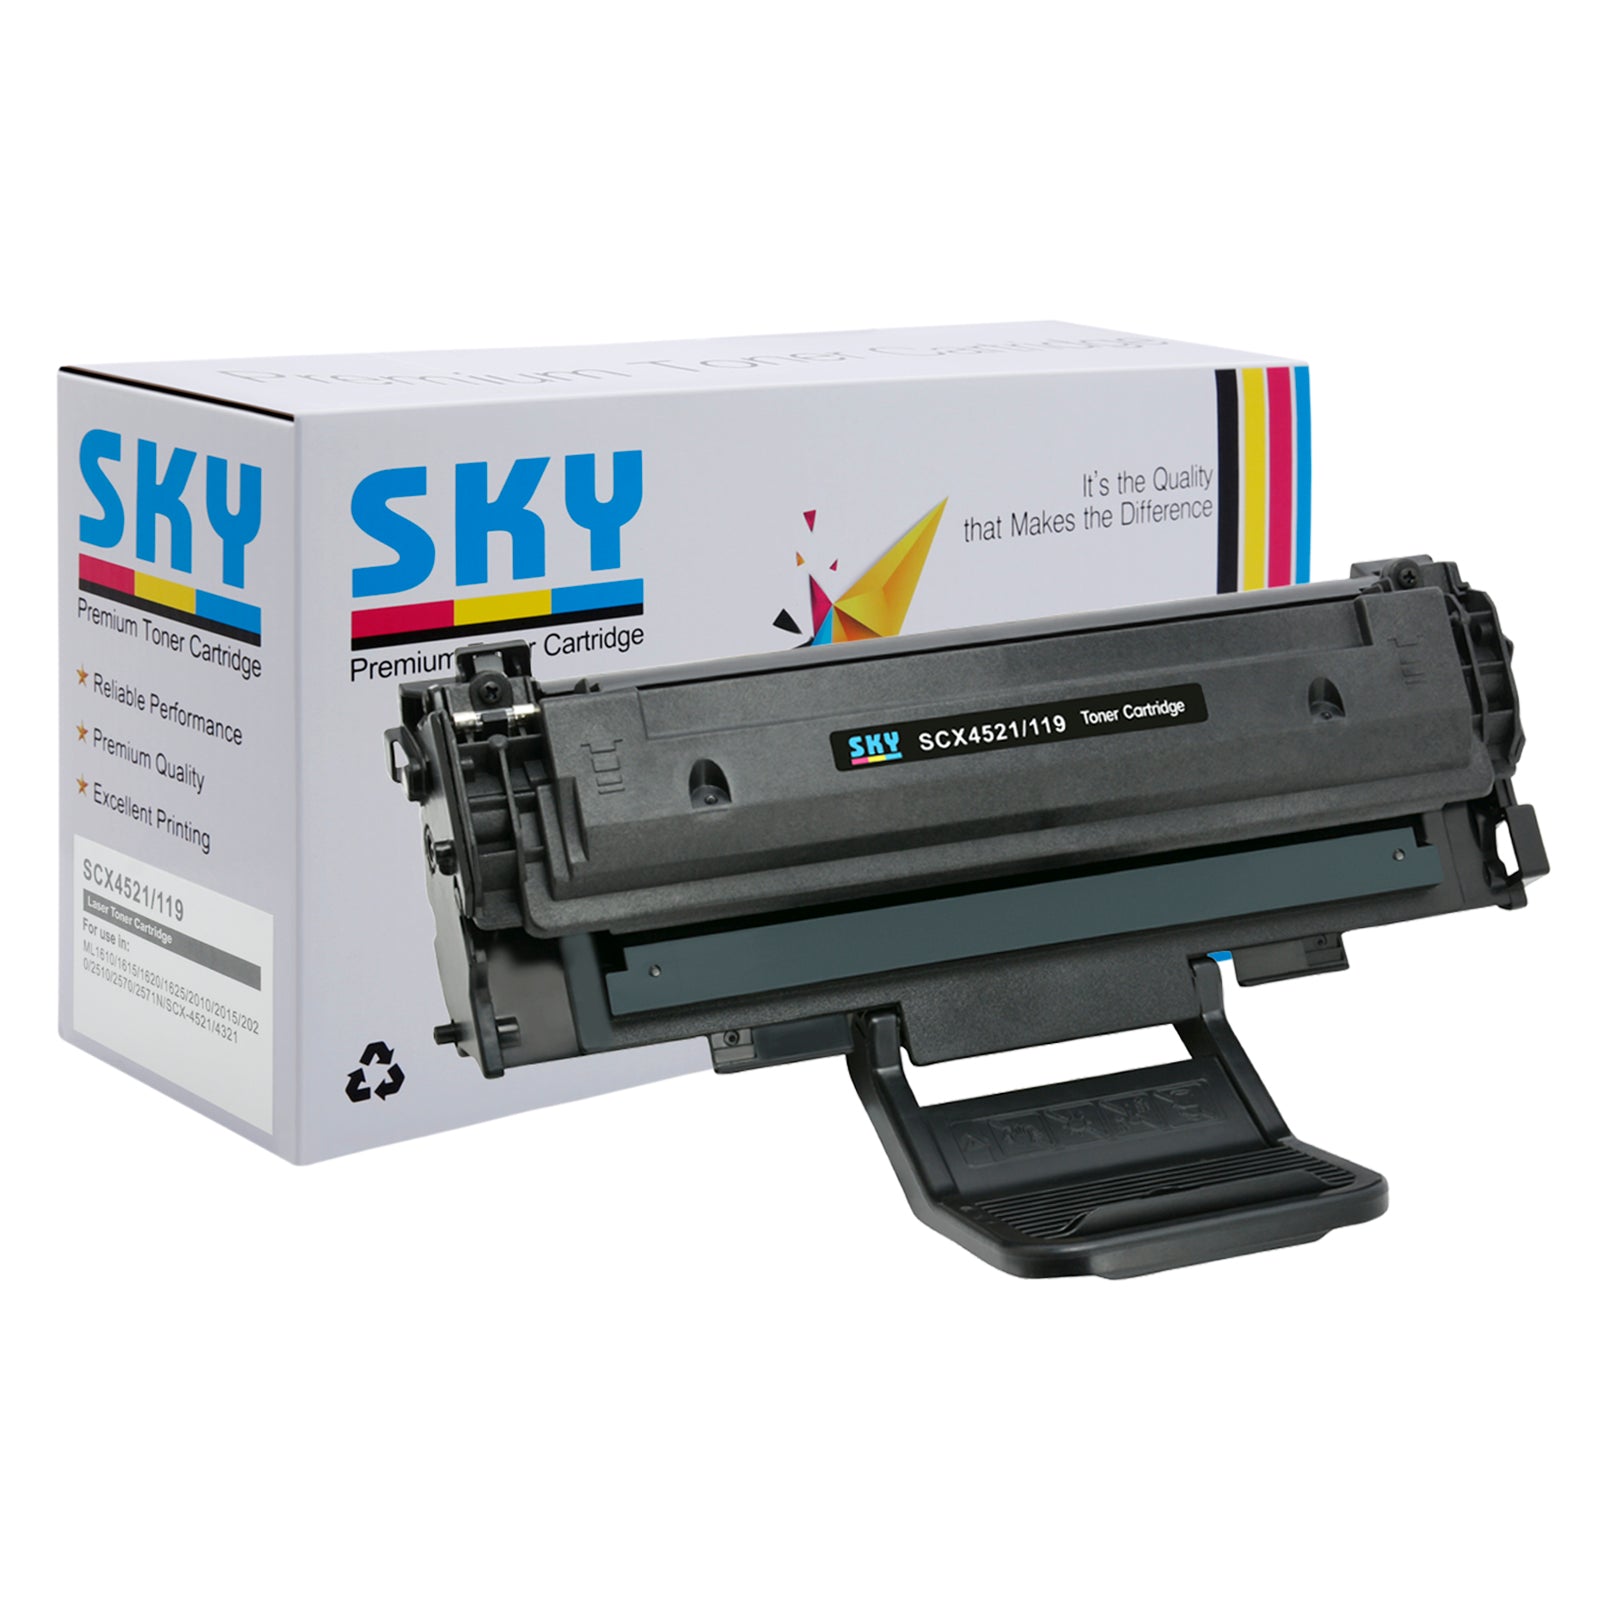 SKY SCX-4521 / 119 Compatible Toner Cartridge For Samsung ML-2010 ML-1610  ML-1615 and SCX-4521